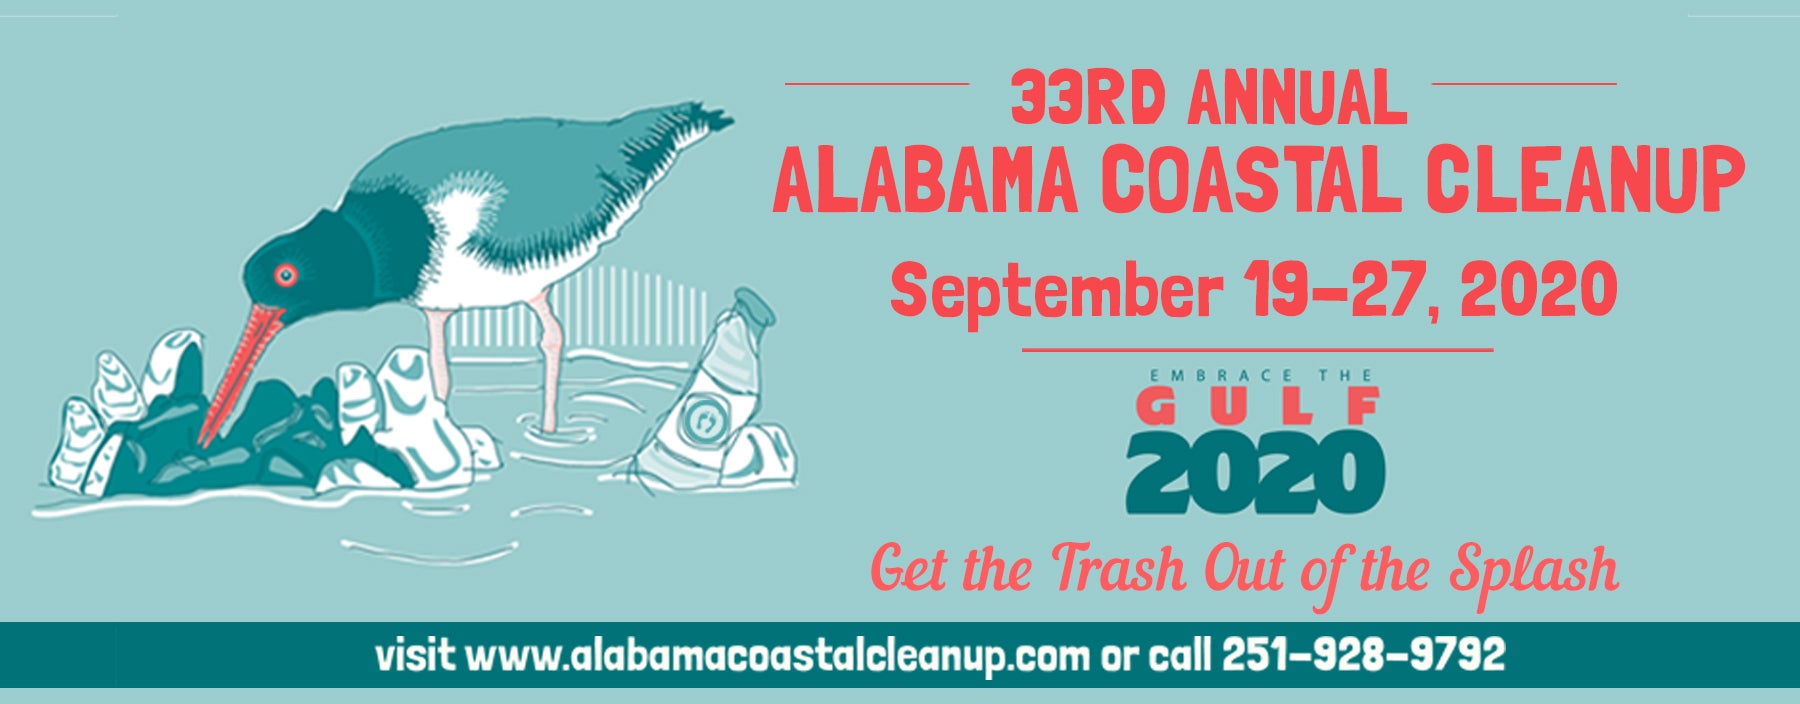 33rd Annual Alabama Coastal Cleanup Set for September 26